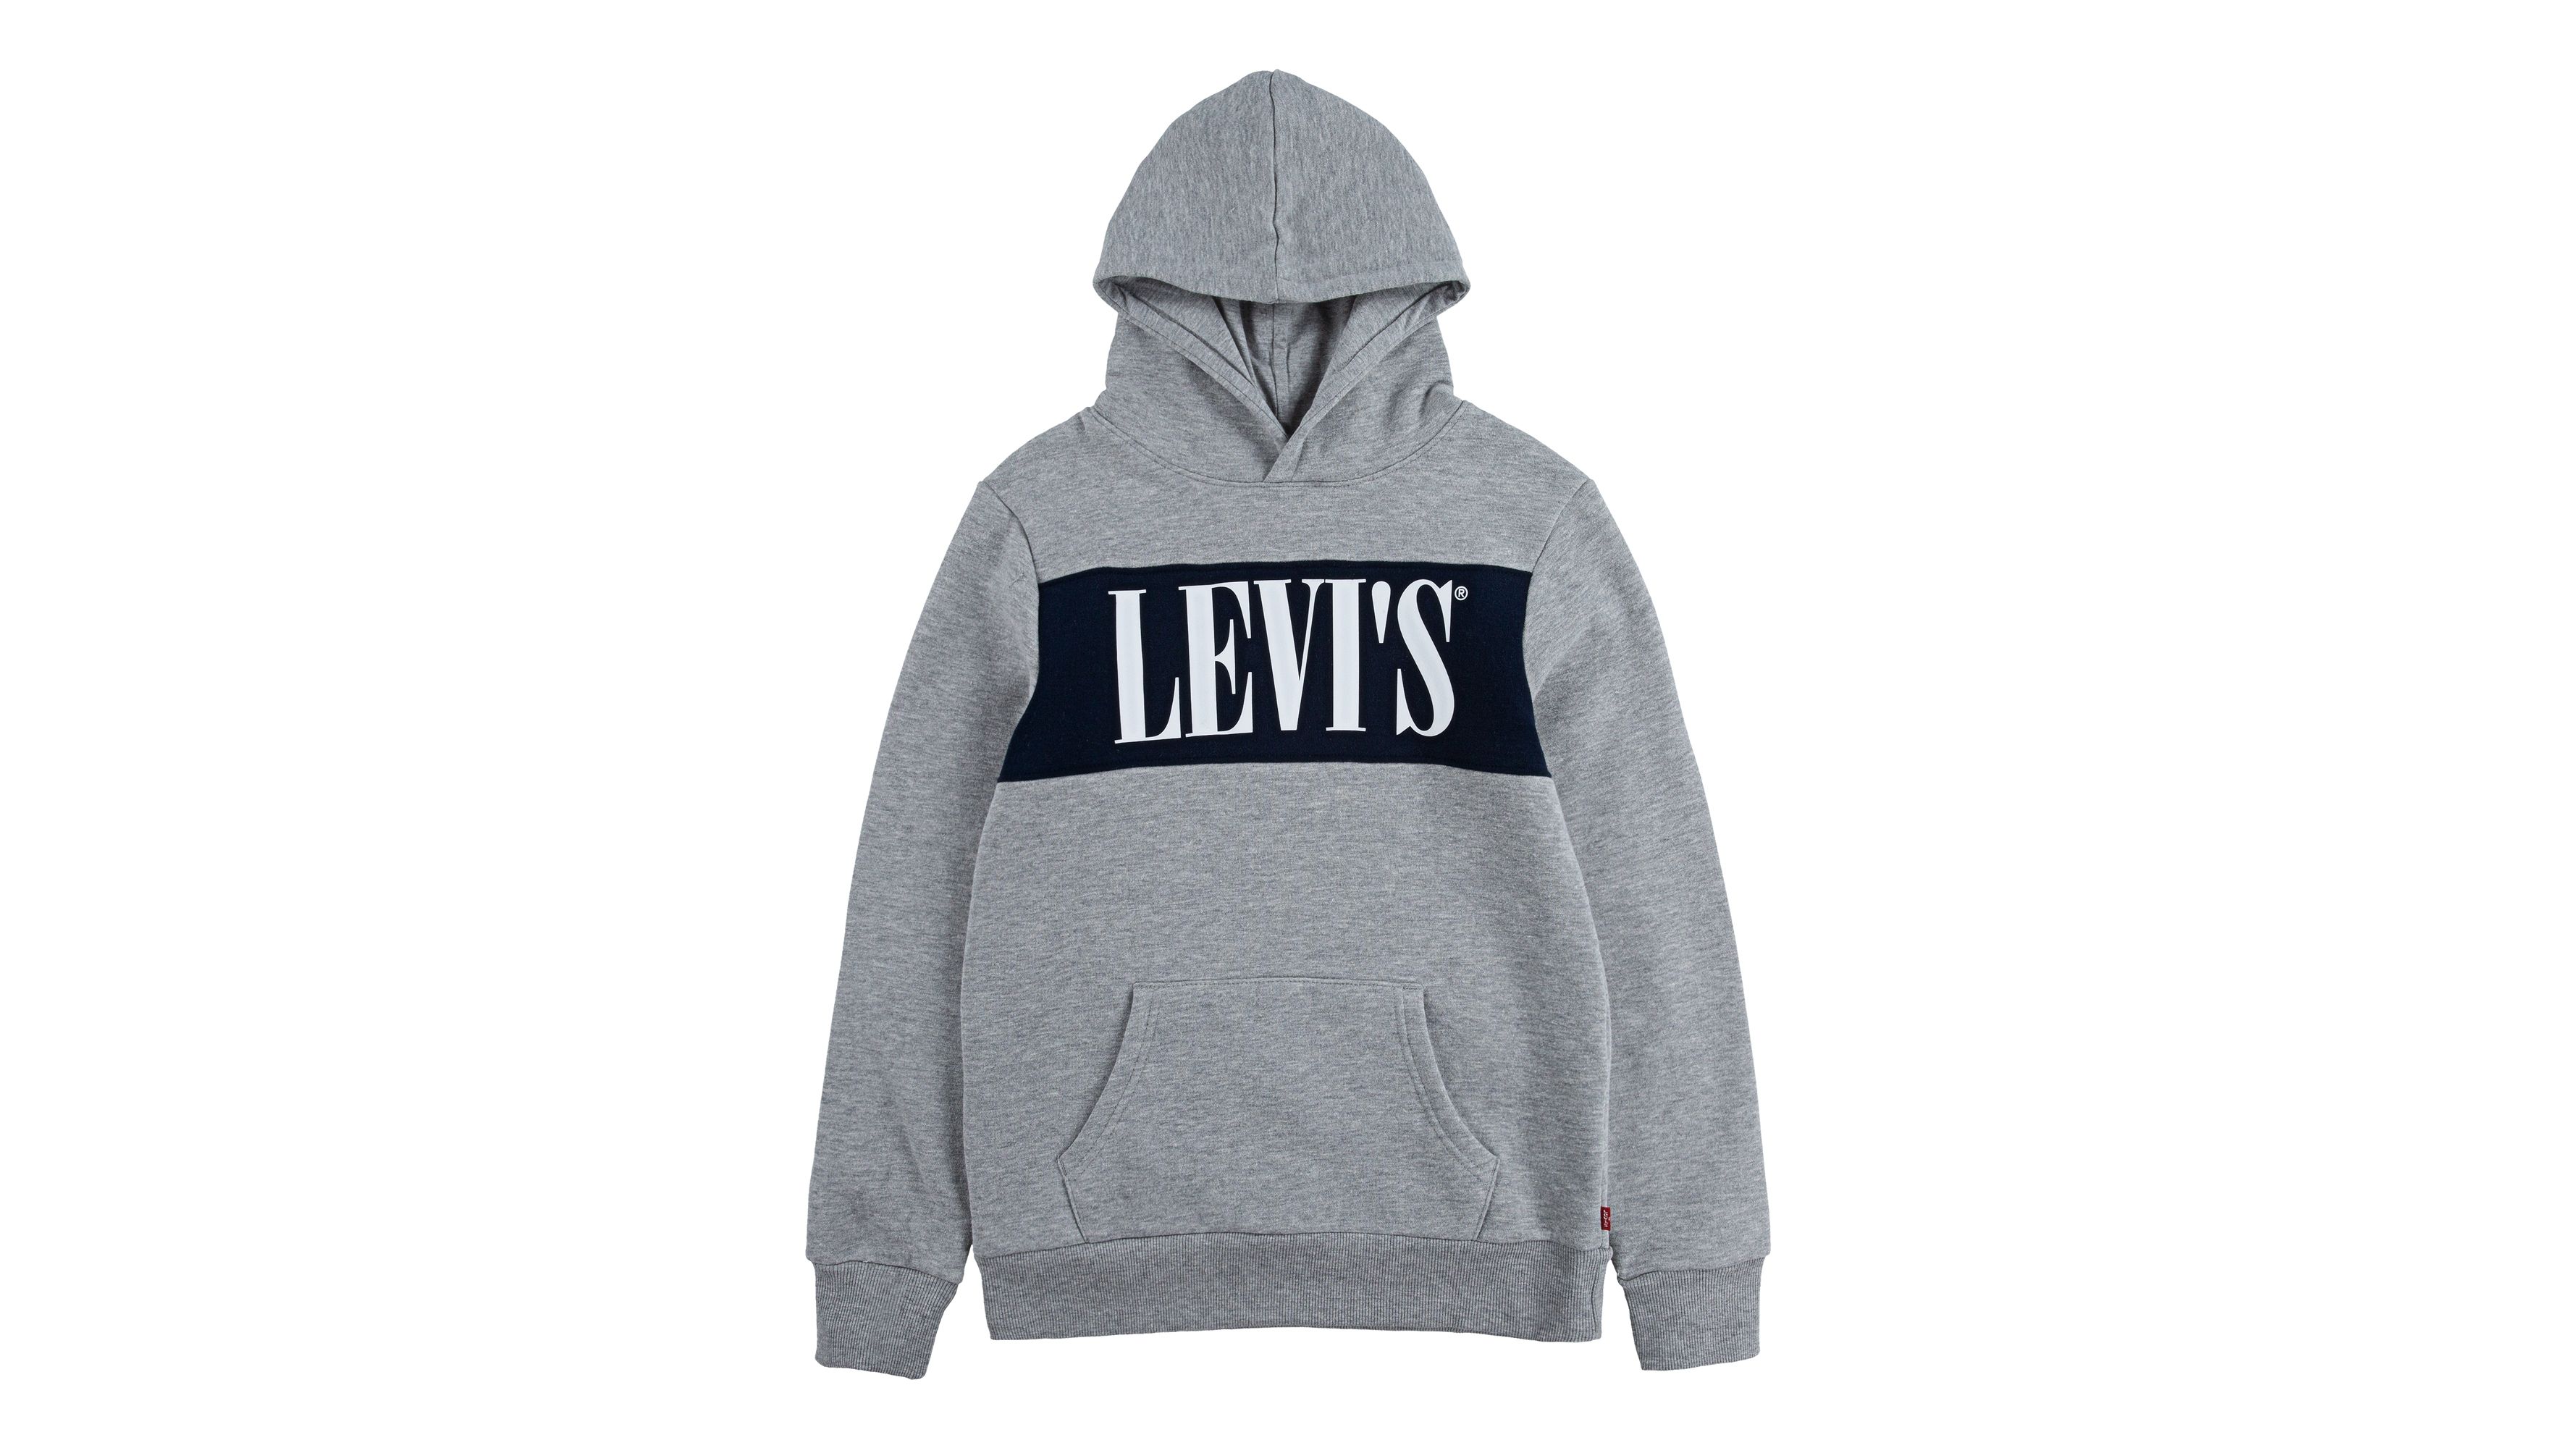 levi's graphic big sleeve sweatshirt